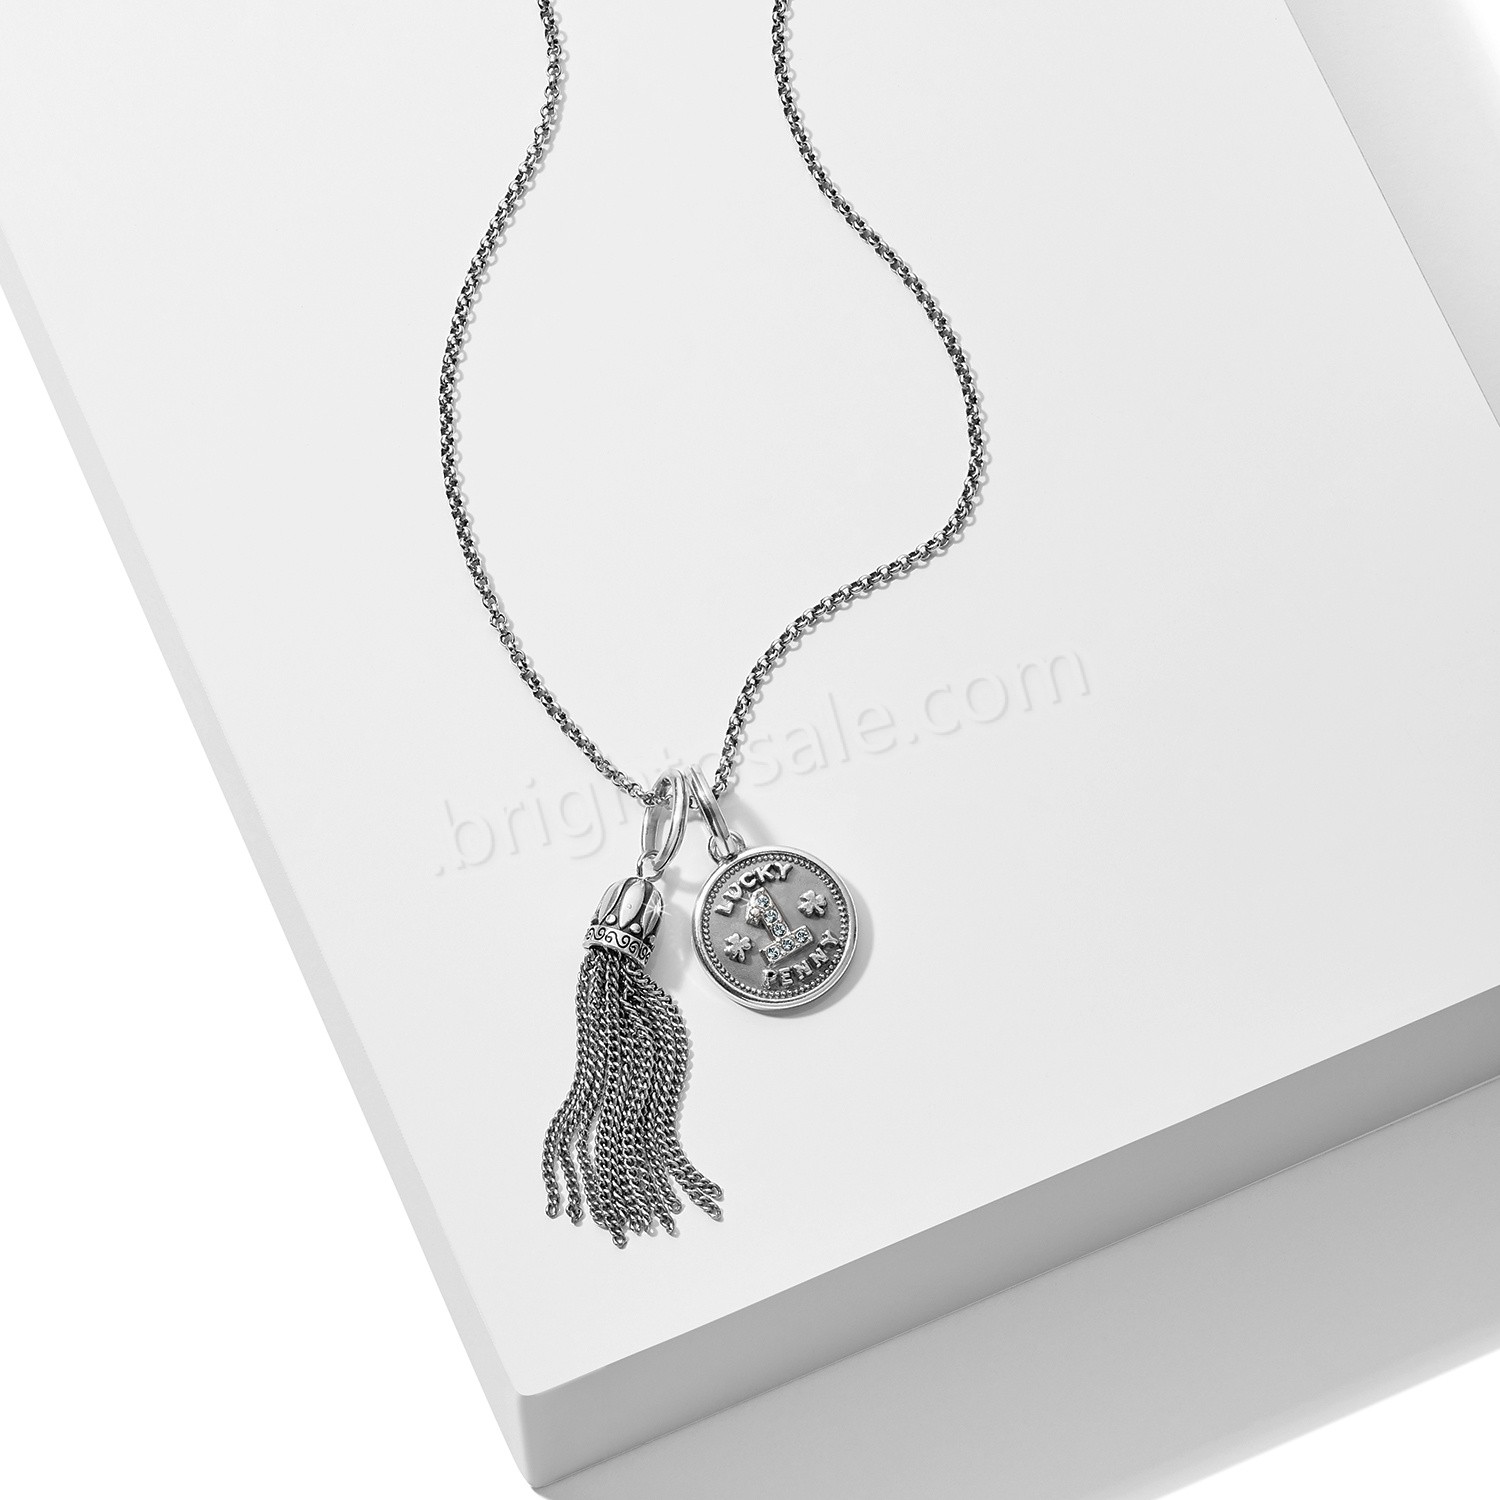 Brighton Collectibles & Online Discount Choose Love Amulet Necklace Gift Set - Brighton Collectibles & Online Discount Choose Love Amulet Necklace Gift Set